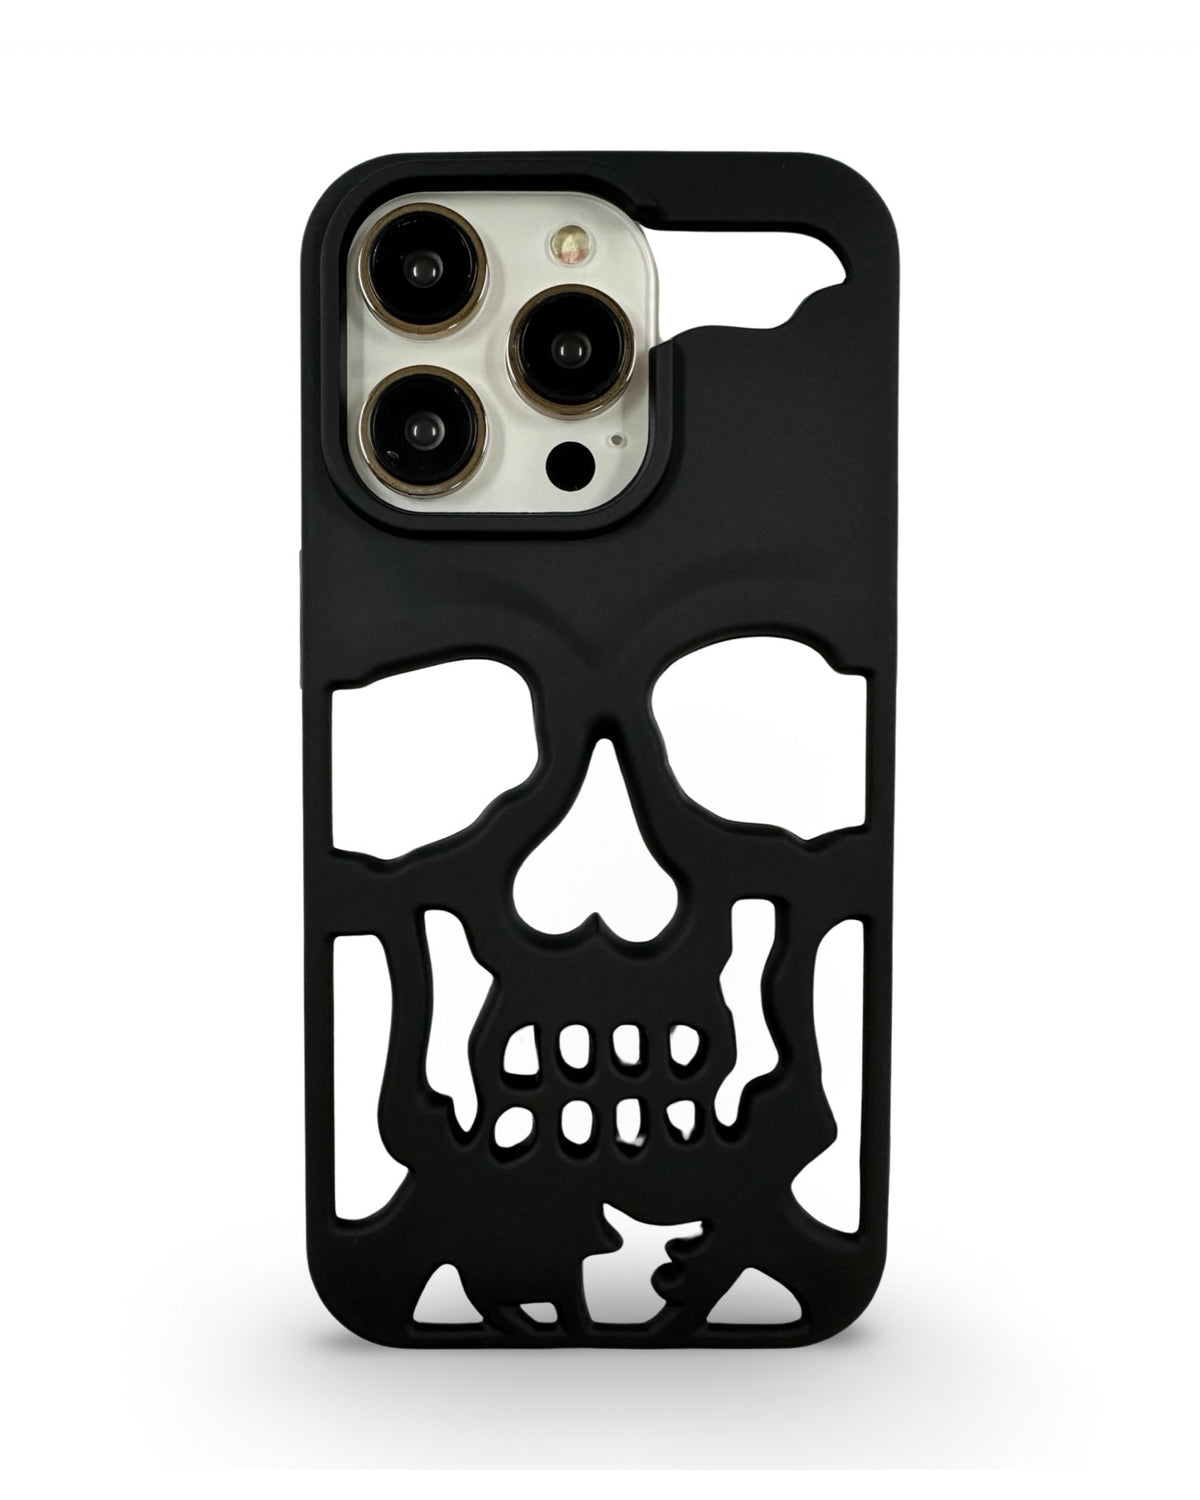 CaseNerd "Black Skull Die Cut" iPhone Case